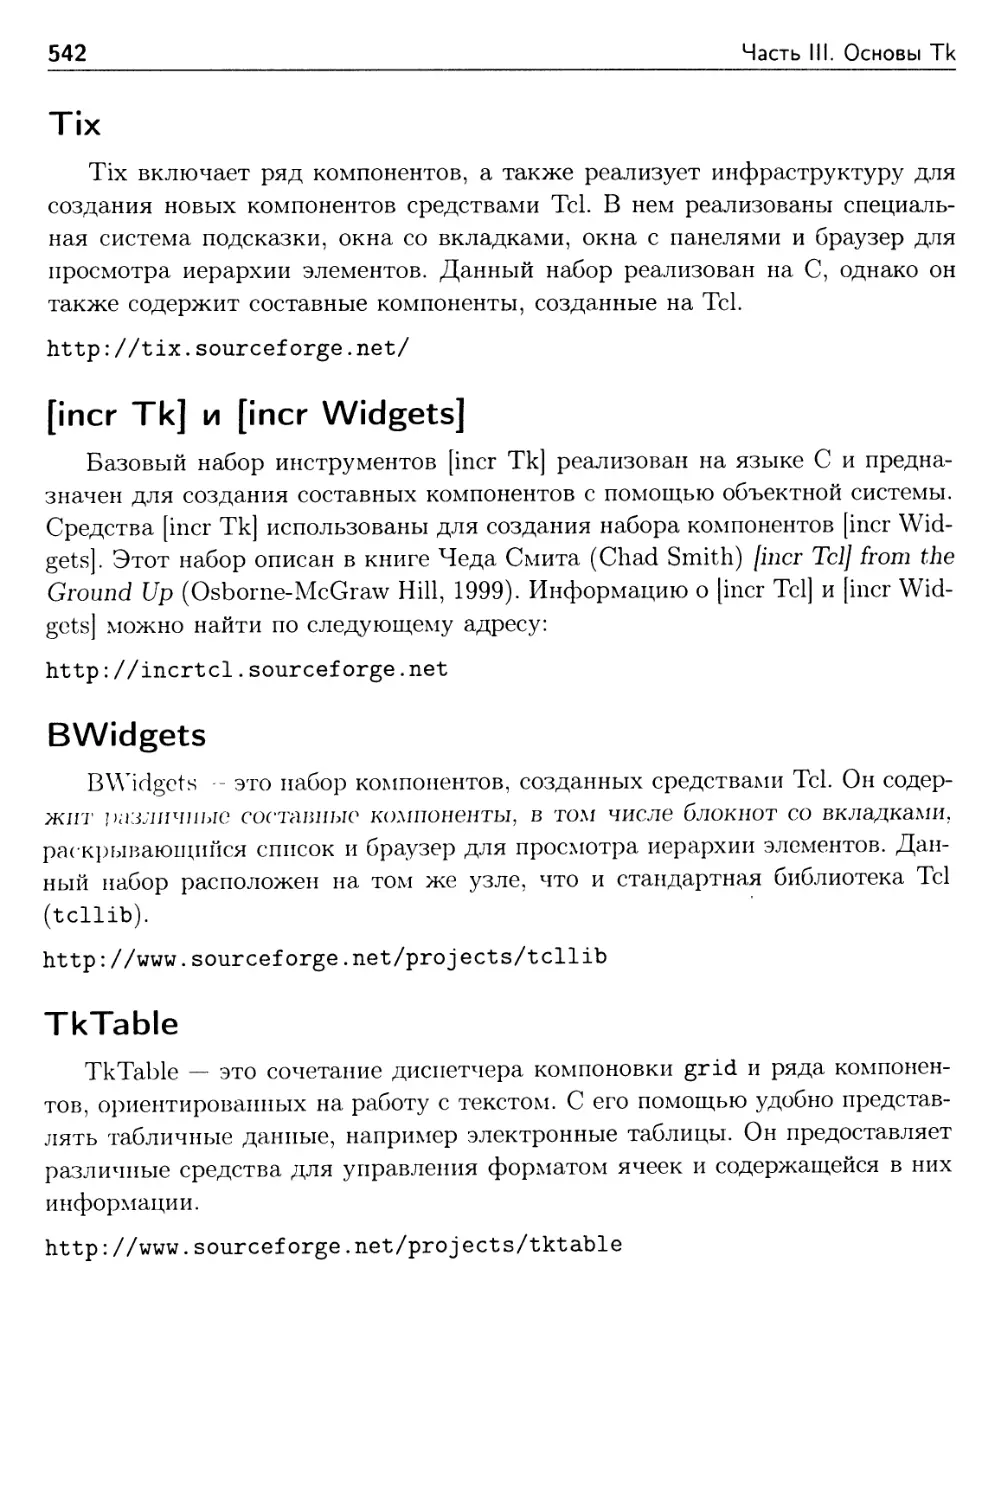 Tix
[incr Tk] и [incr Widgets]
BWidgets
TkTable